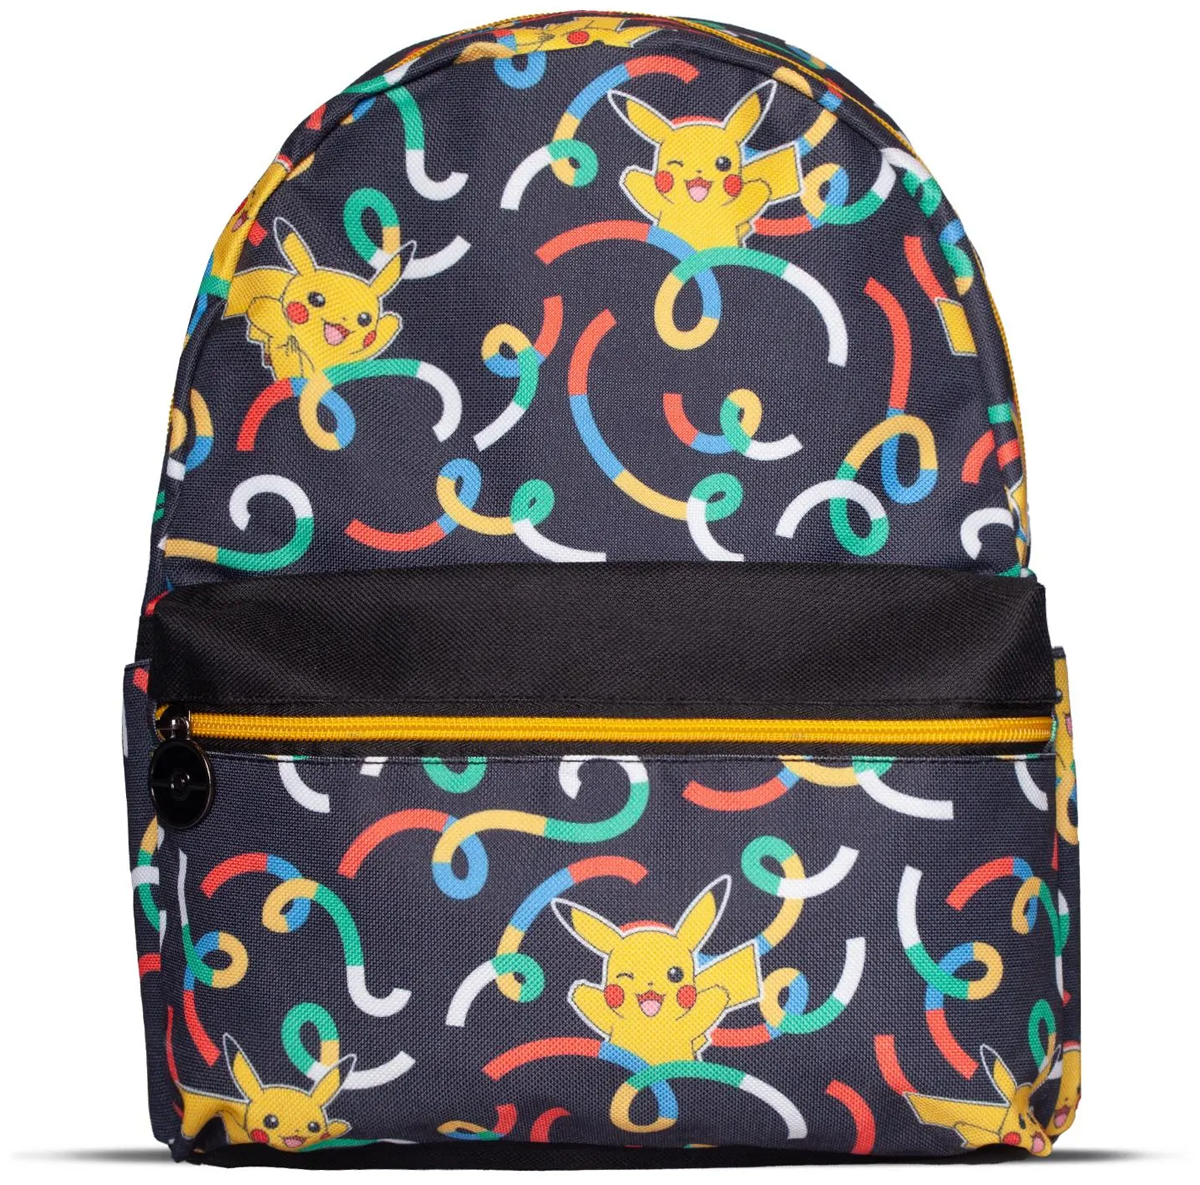 Pokémon - Happy Pikachu! - Mini-Rucksack - Mini-Rucksack - multicolor